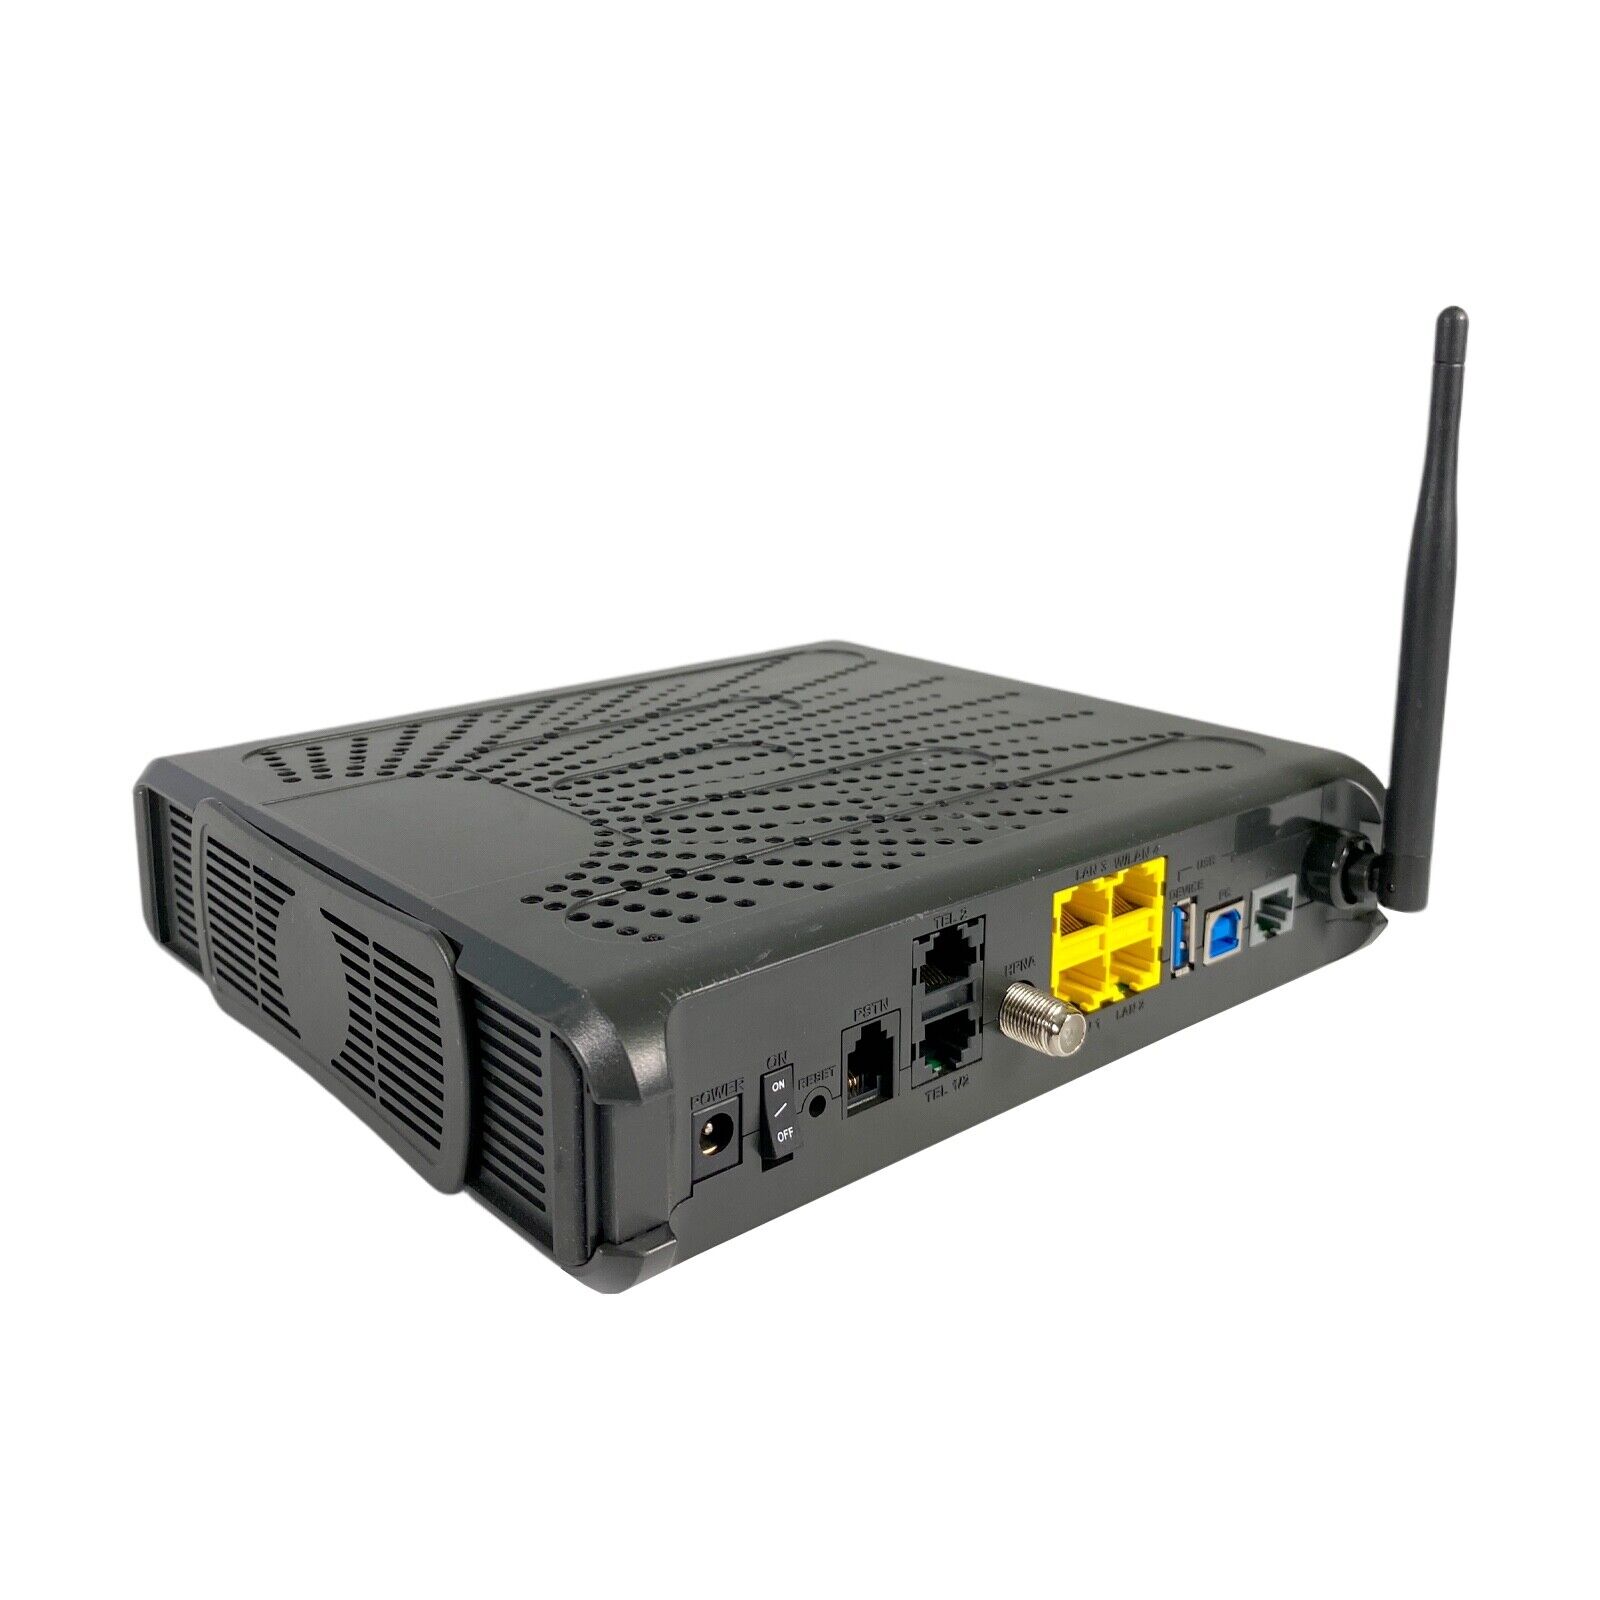 Cisco DDR2200-CL ADSL2+ Residential Gateway Wireless Router Modem 802.11b/g